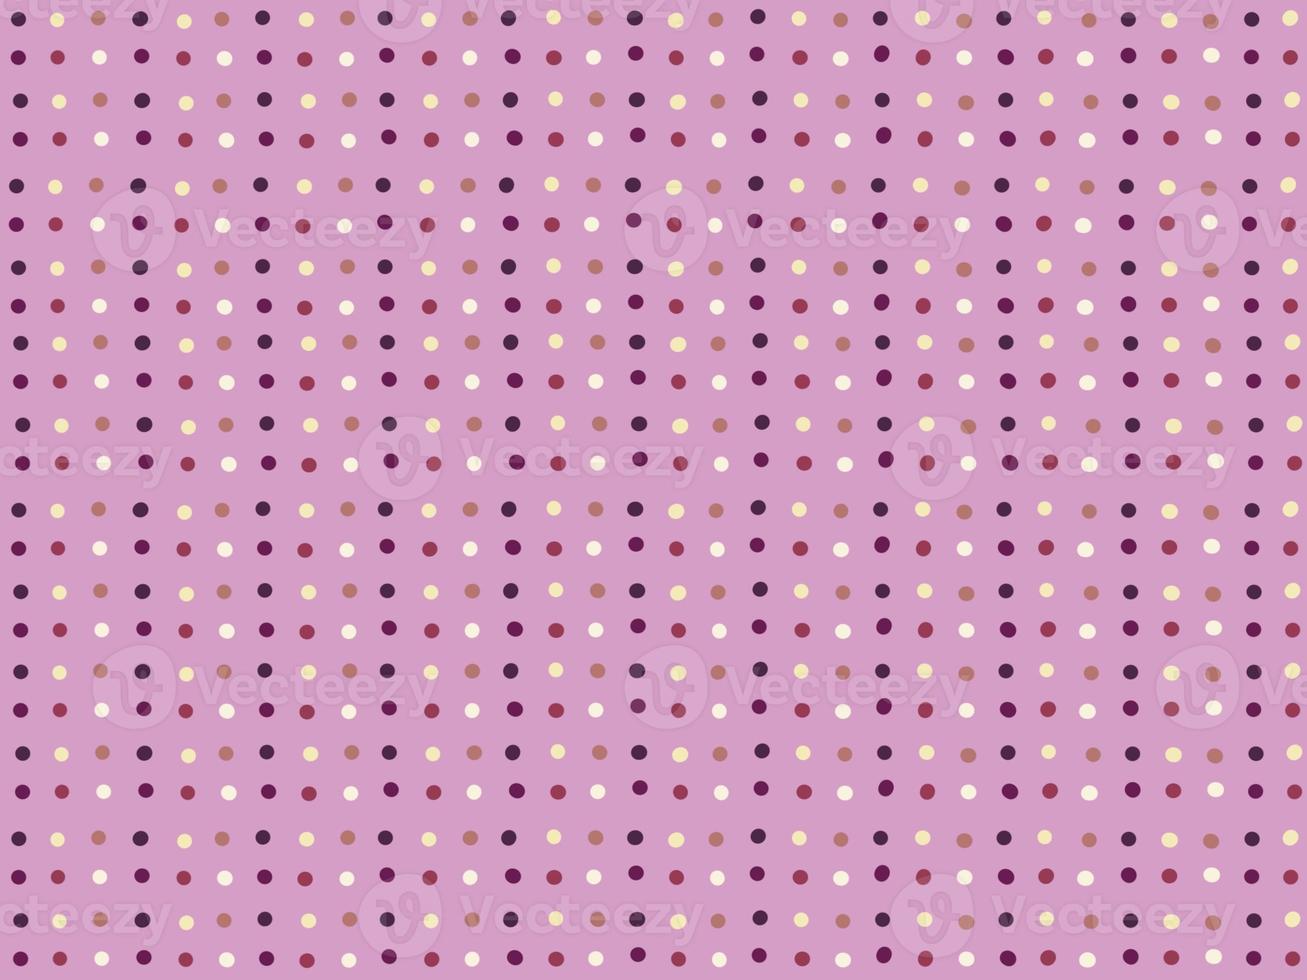 Polka dot on purple pattern photo